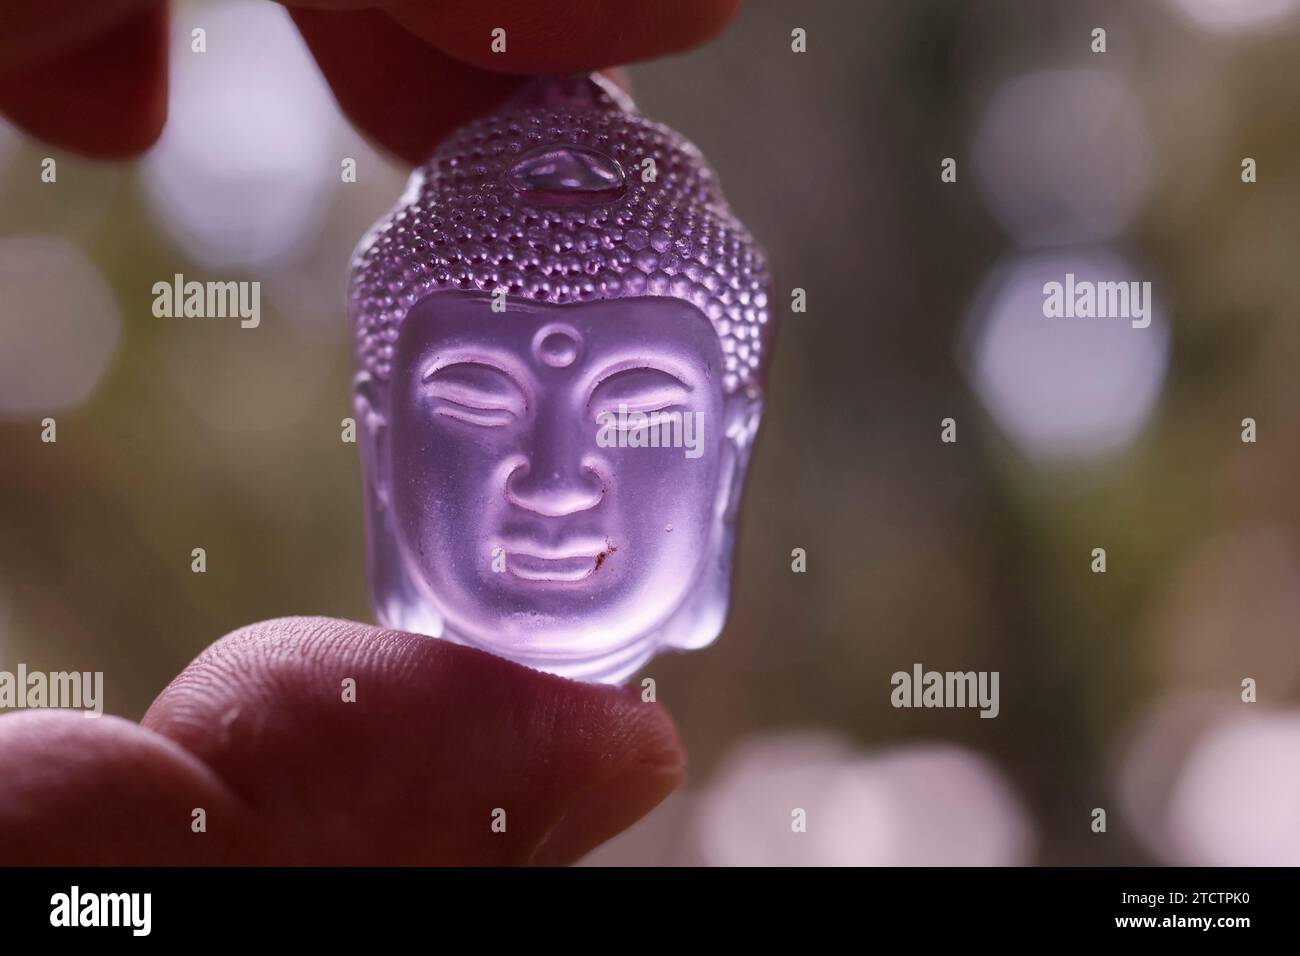 Purple Buddha head pendant in hand. Buddhist symbol. Stock Photo